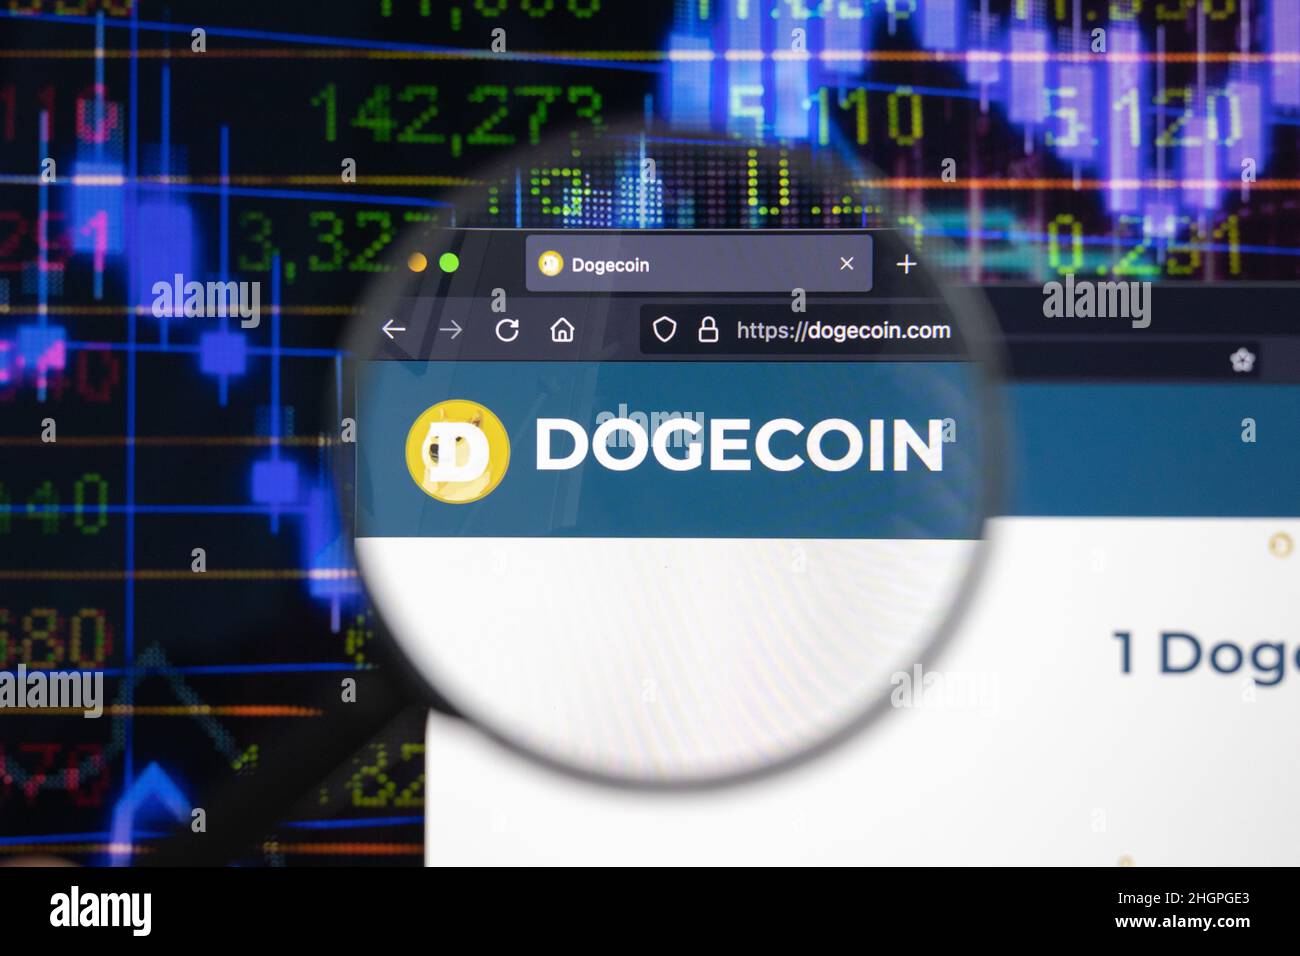 Dogecoin crypto company logo on a website, seen on a computer screen through a magnifying glass. Stock Photo